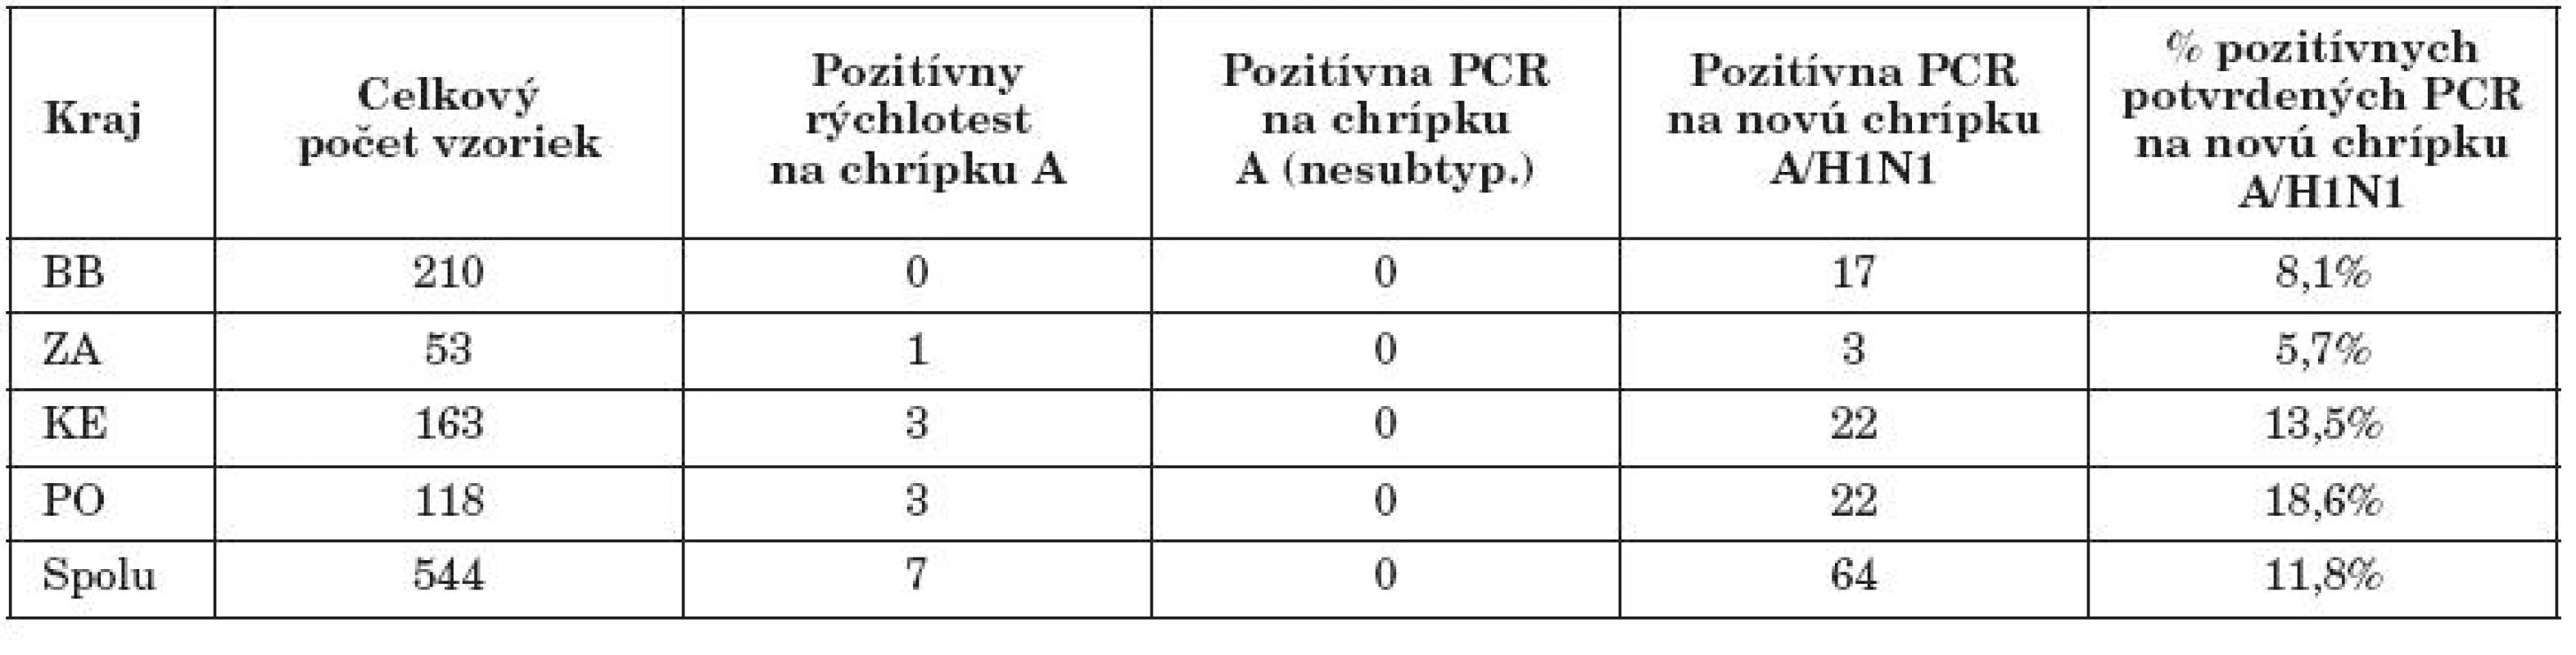 Virologická diagnostika pandemickej chrípky A/H1N1 na RÚVZ v BB – 1. polrok 2010

Table 3. Virological diagnosis of pandemic influenza A/H1N1 at the RAPH in Banská Bystrica – first half 2010